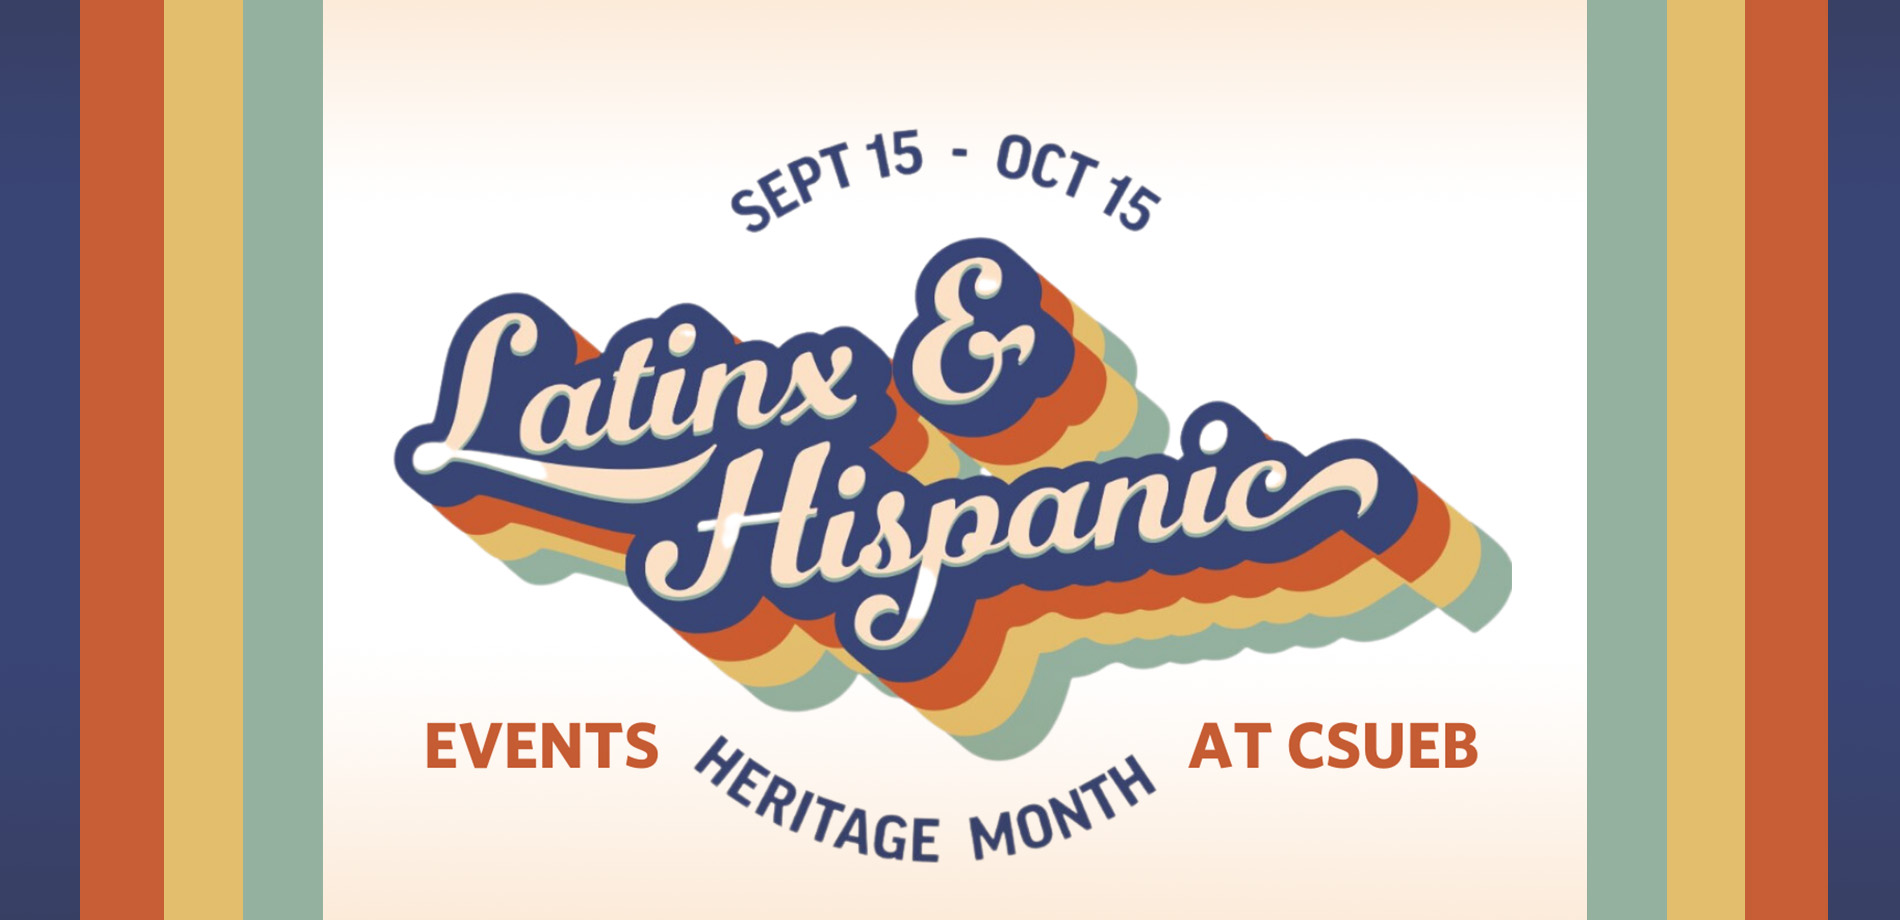 Latinx & Hispanic Heritage Month